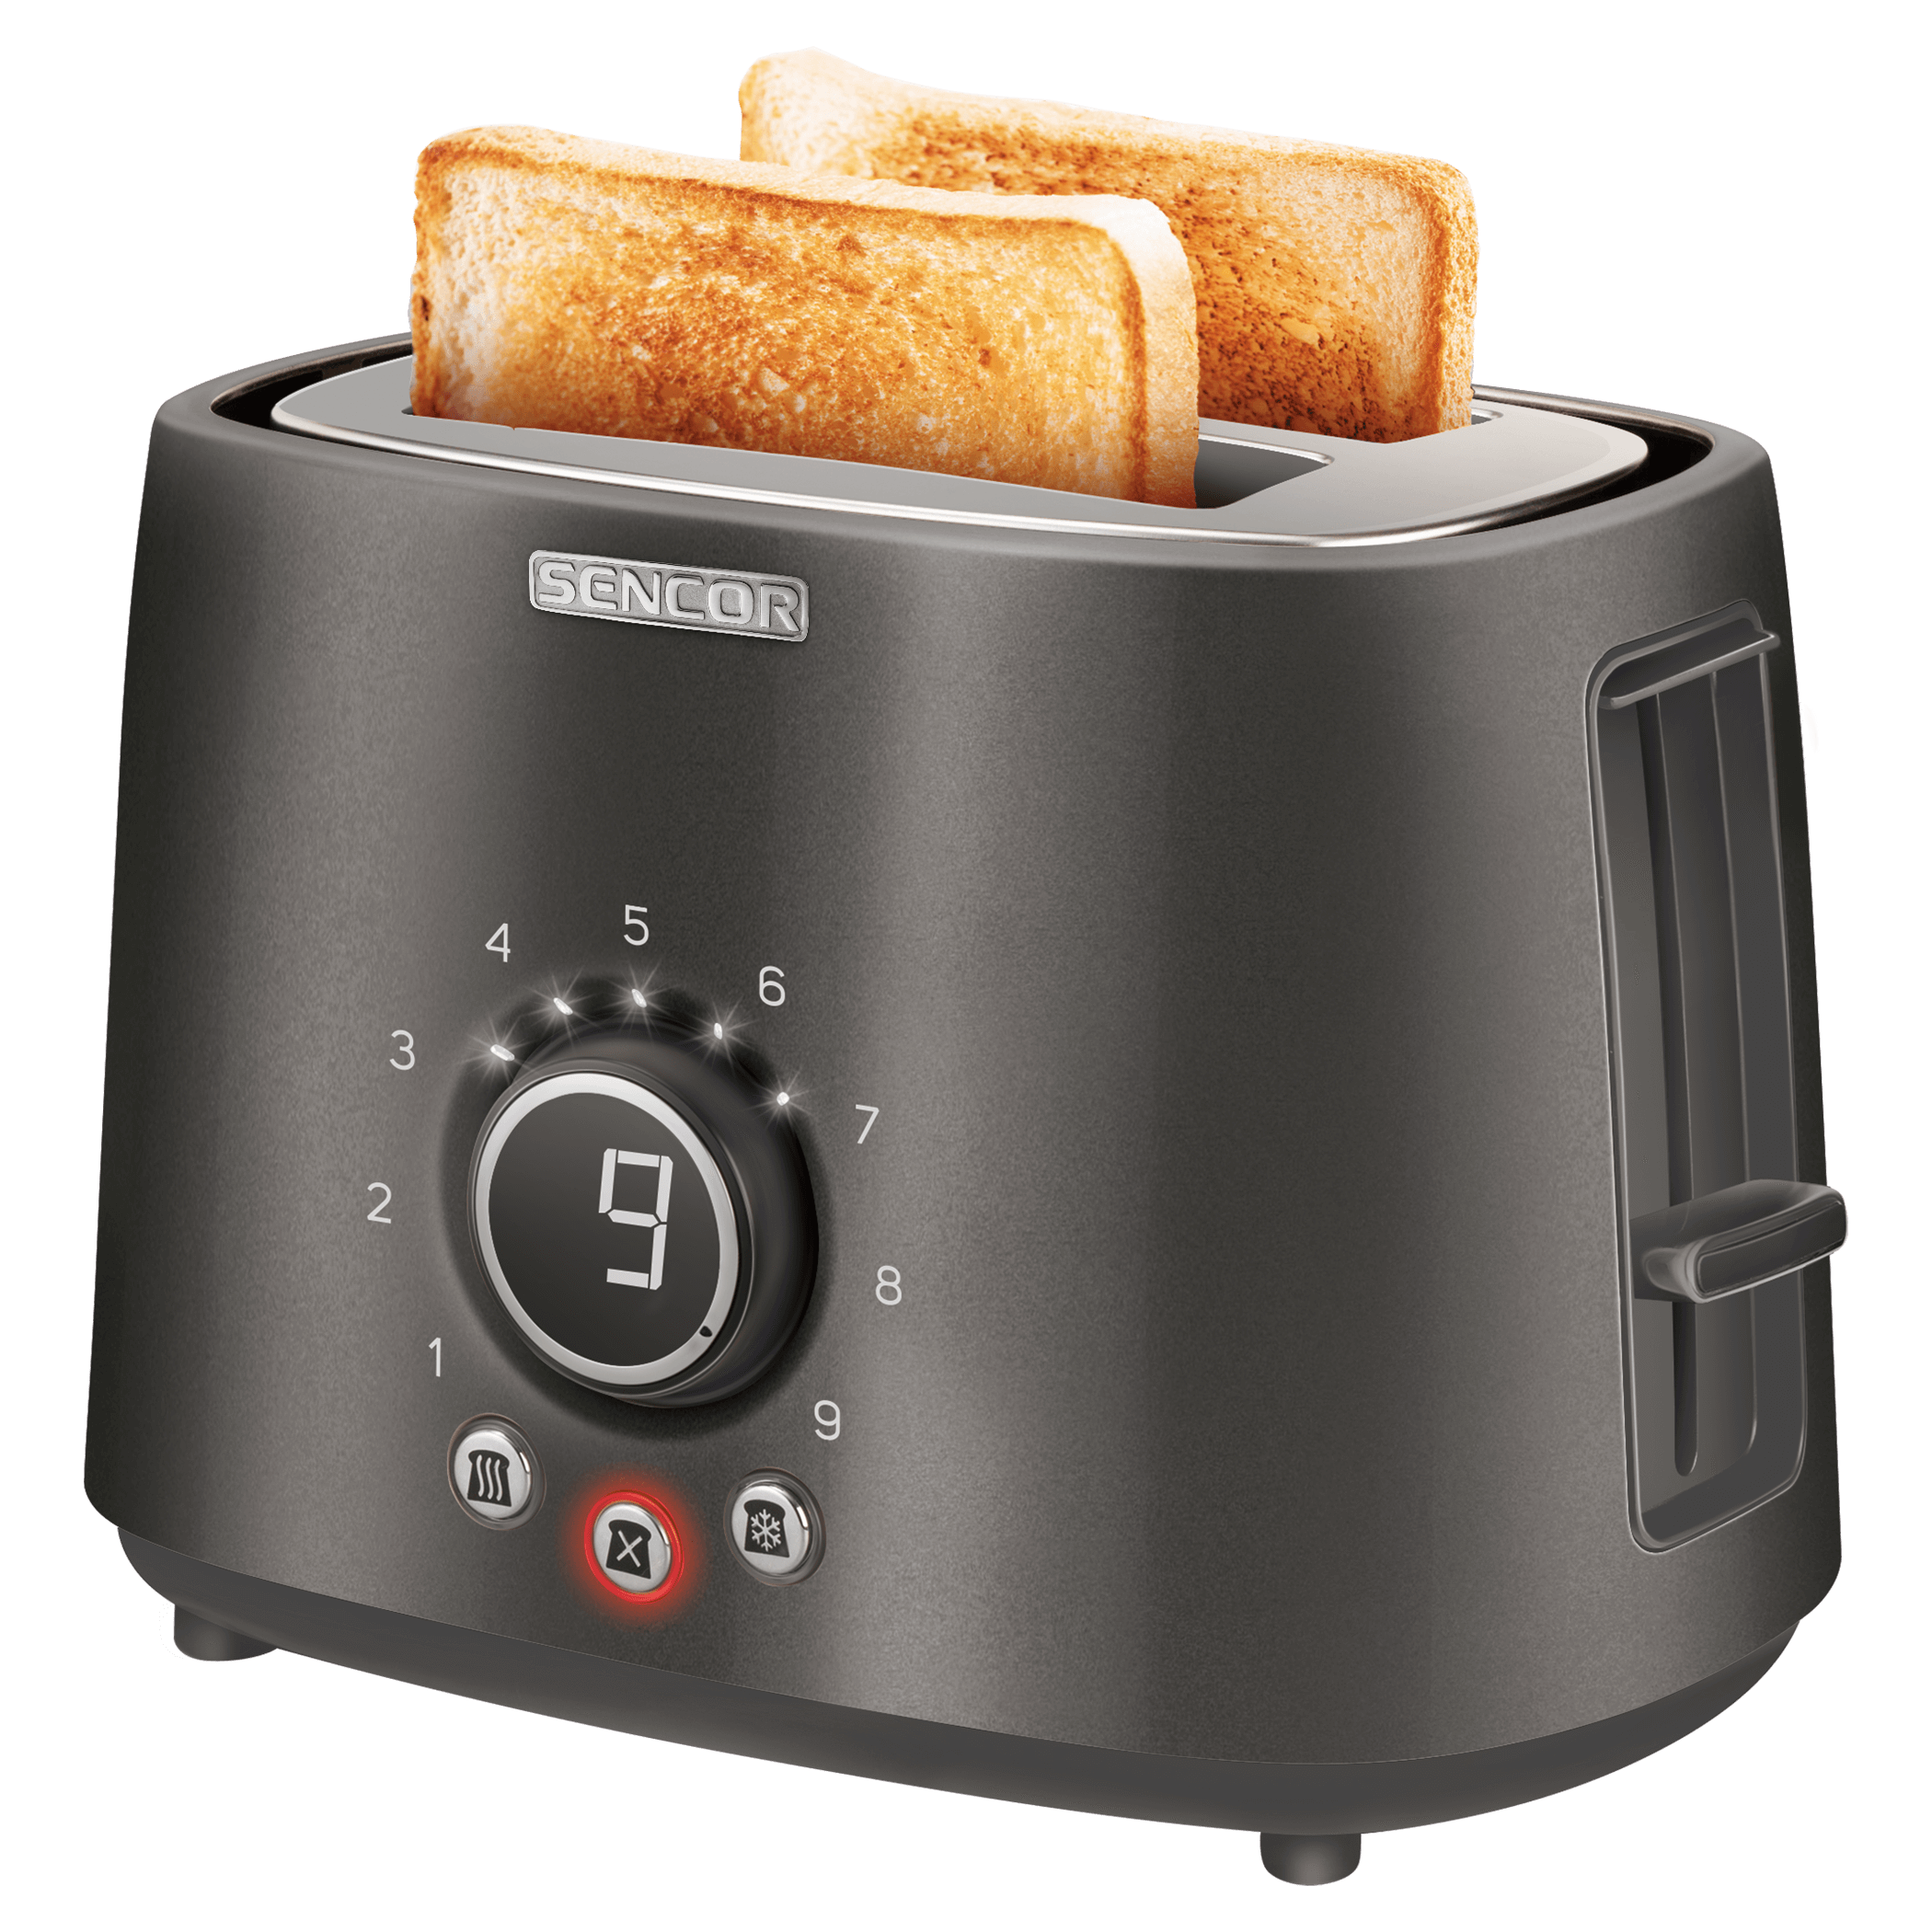 https://pngimg.com/d/toaster_PNG20.png